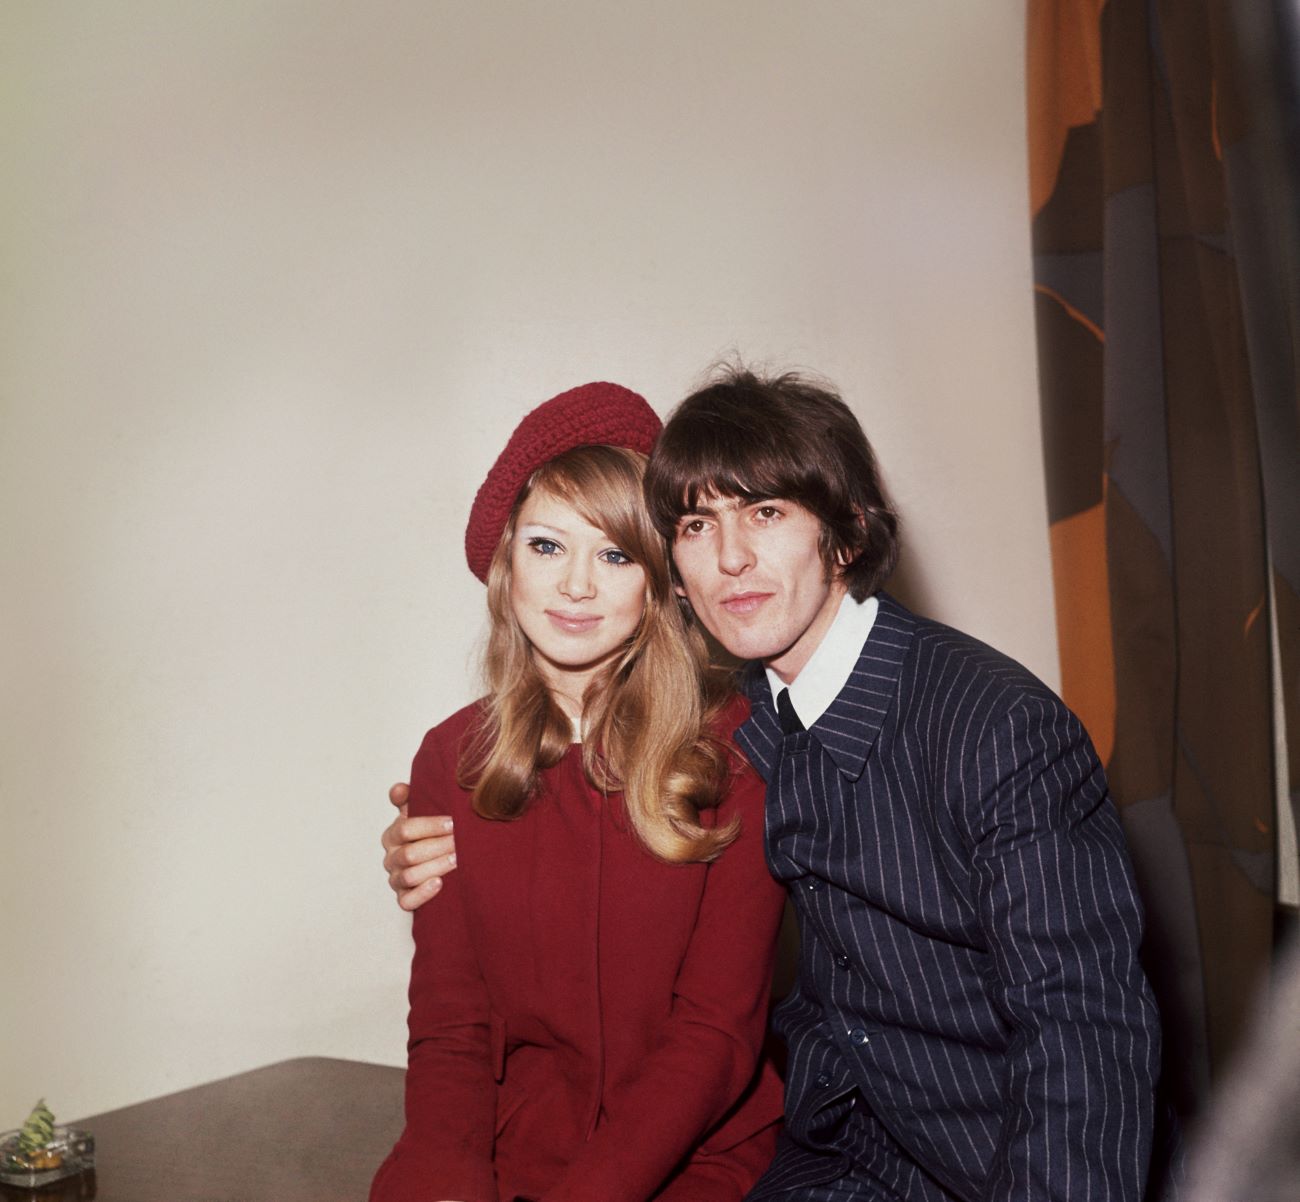 George Harrison sits with his arm around Pattie Boyd's shoulder on their wedding day.